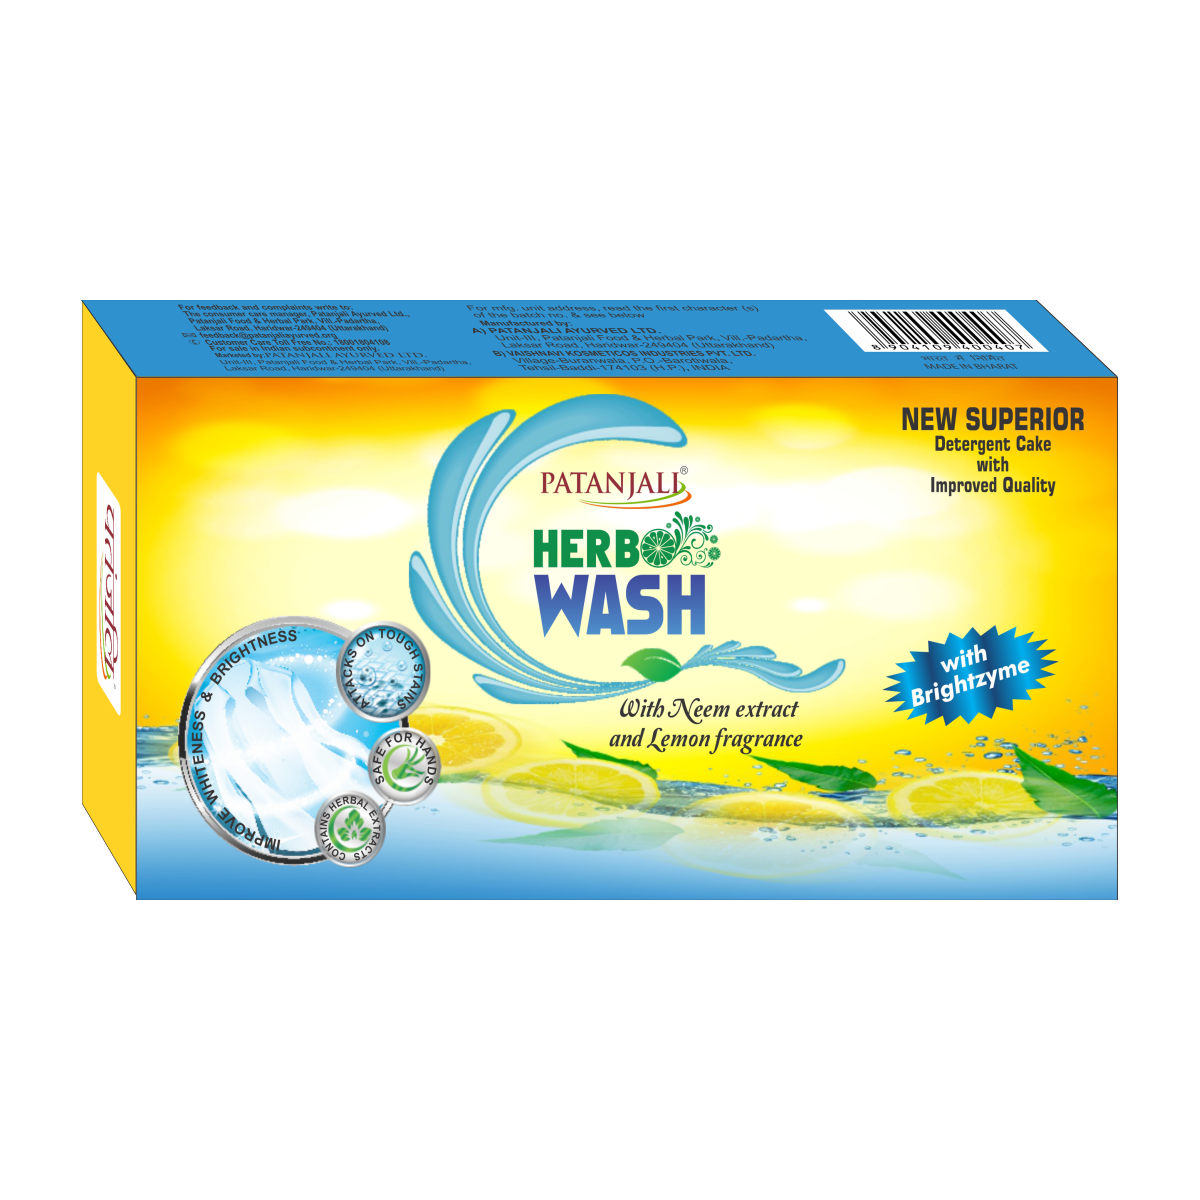 Patanjali Detergent Soap (Herbo Wash) | GROCERS